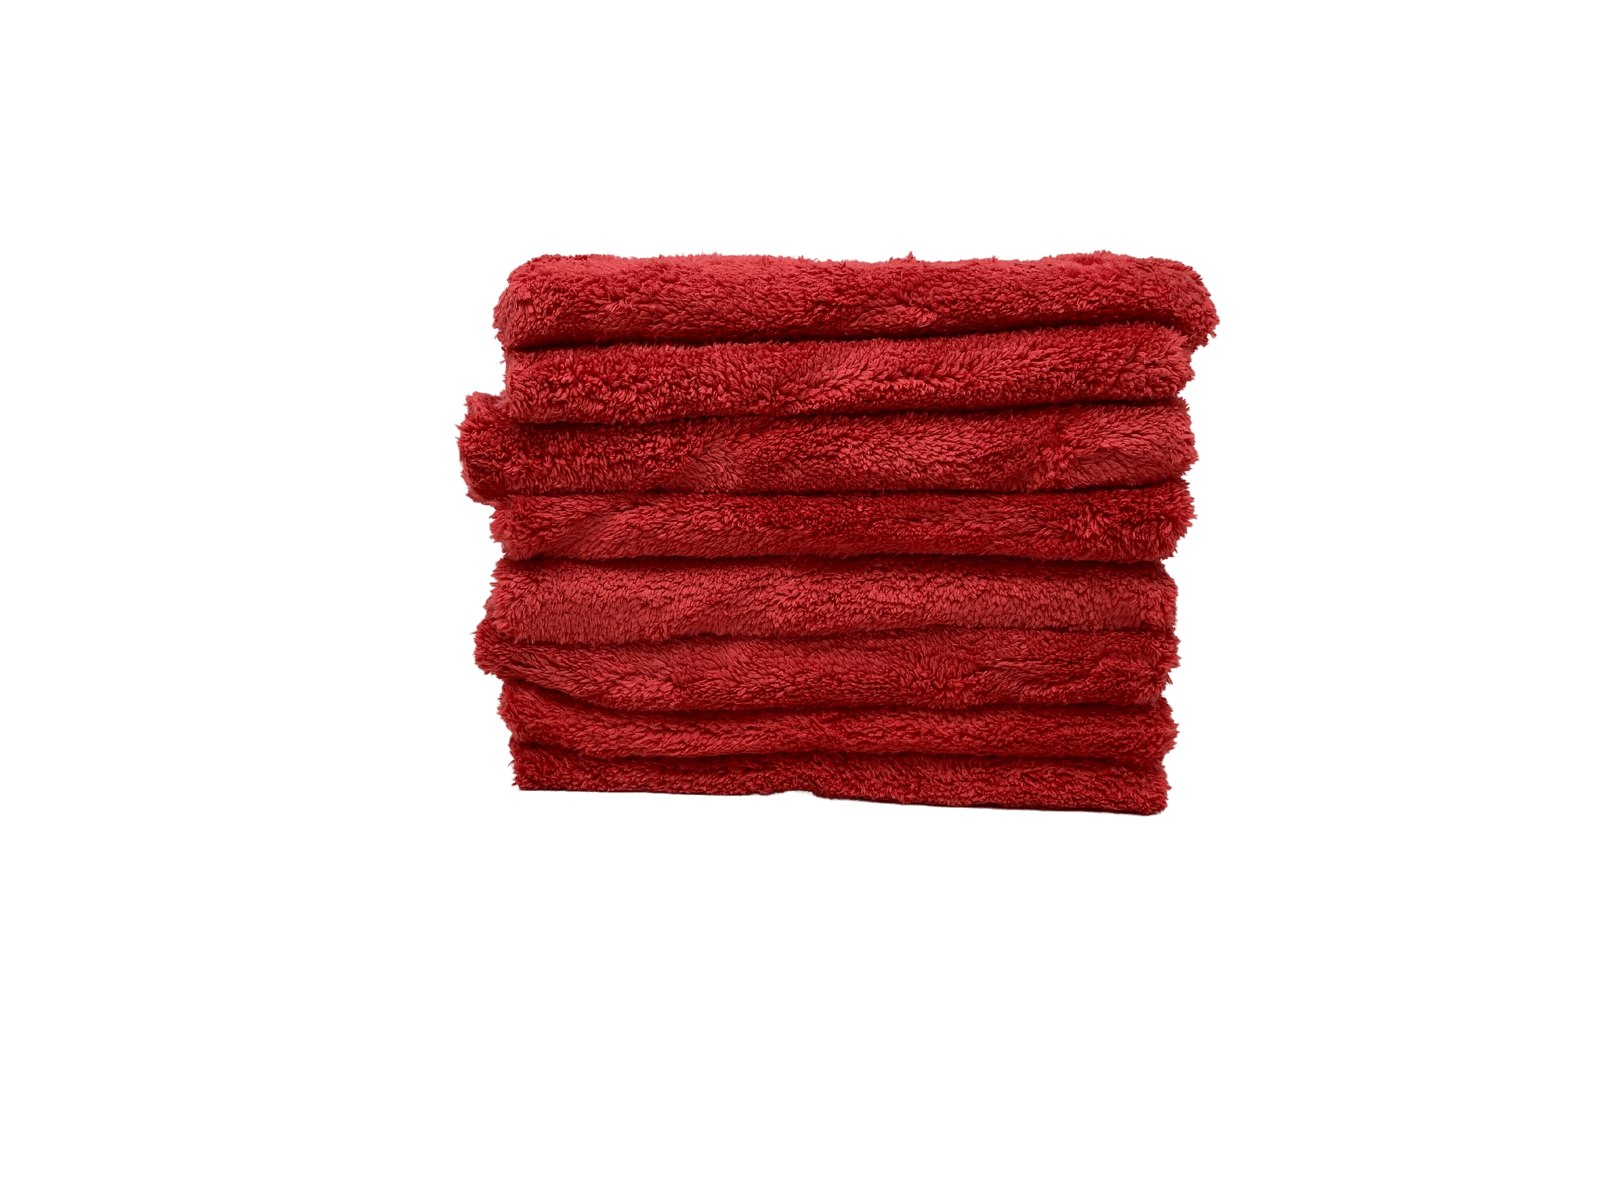 McKee's 37 4 Pack Eagle Edgeless 500 Ultra Plush Microfiber Towels